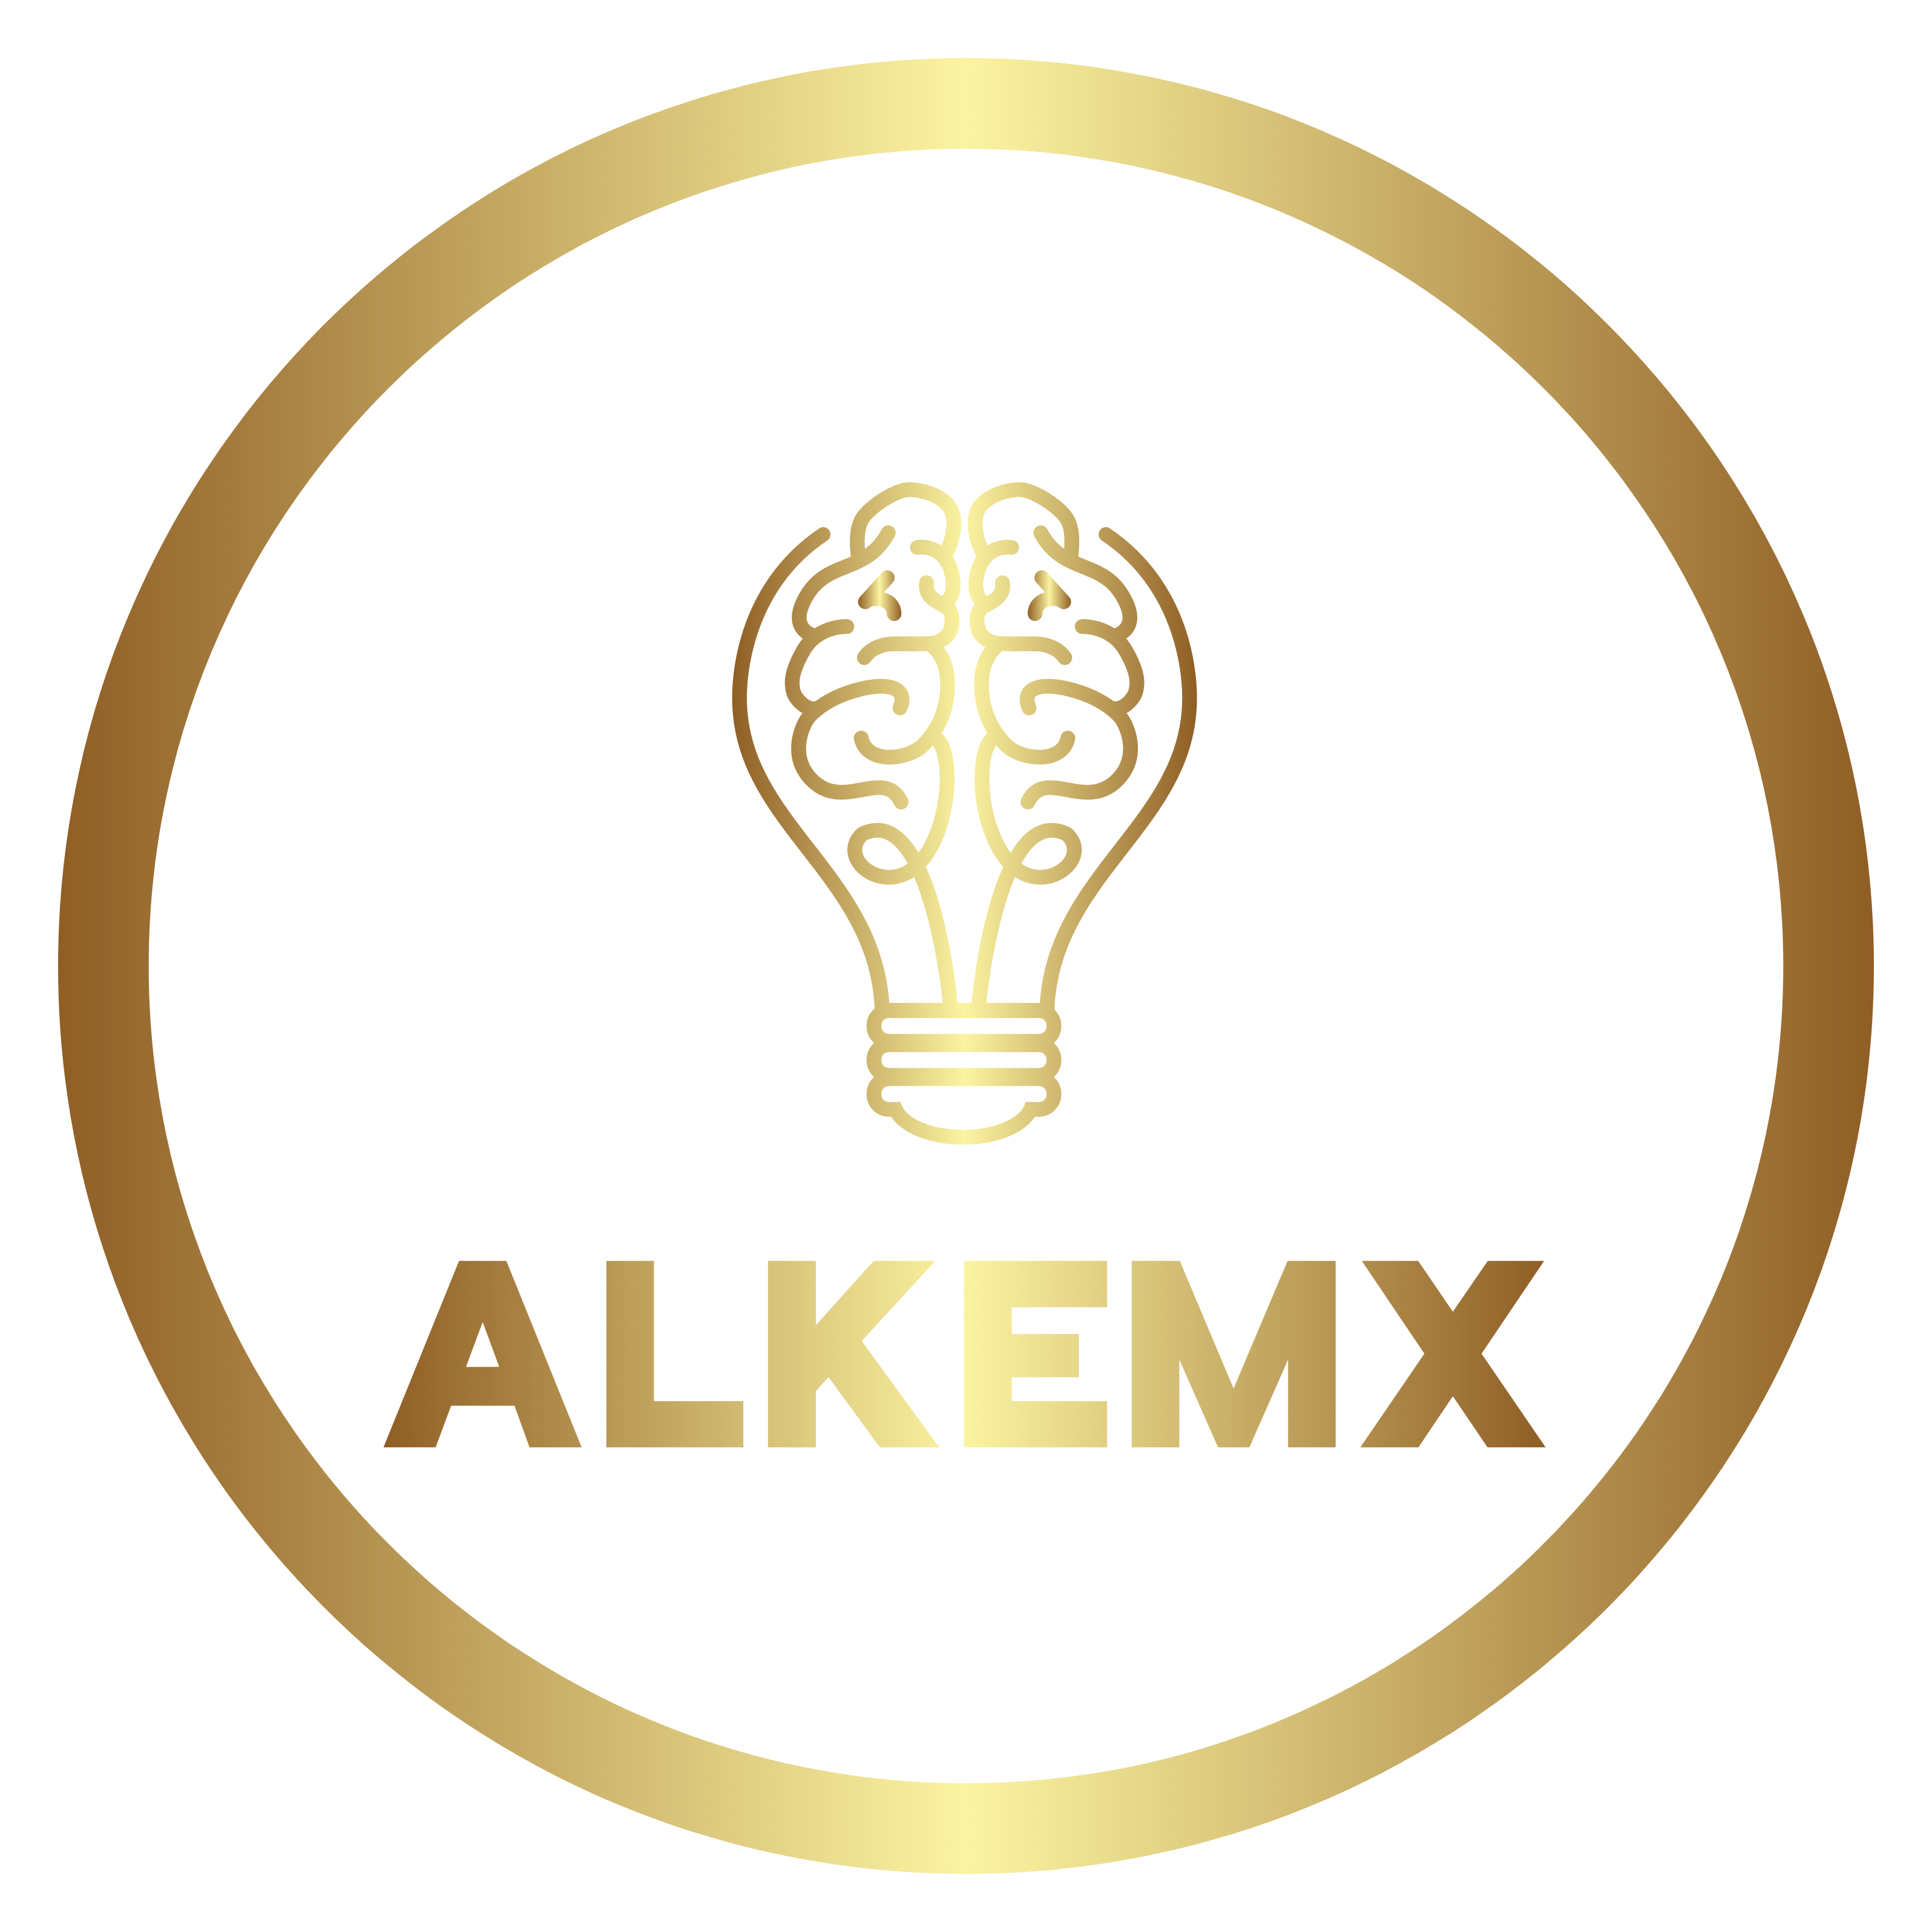 Alkemx